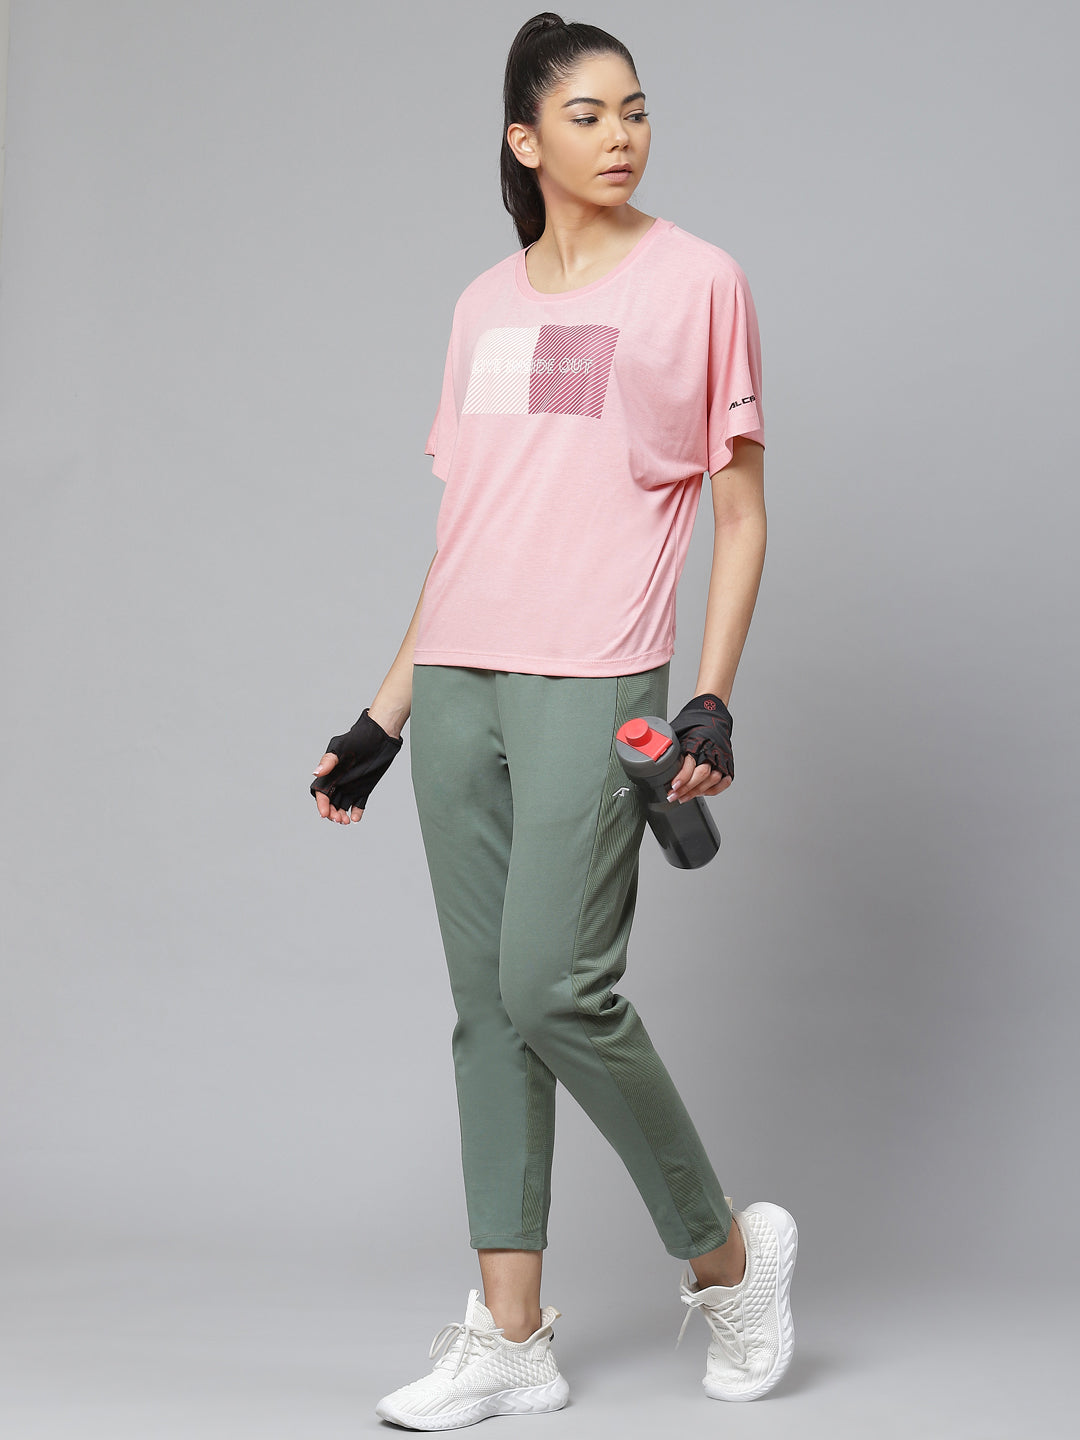 Alcis Women Pink Printed Slim Fit Round Neck T-shirt